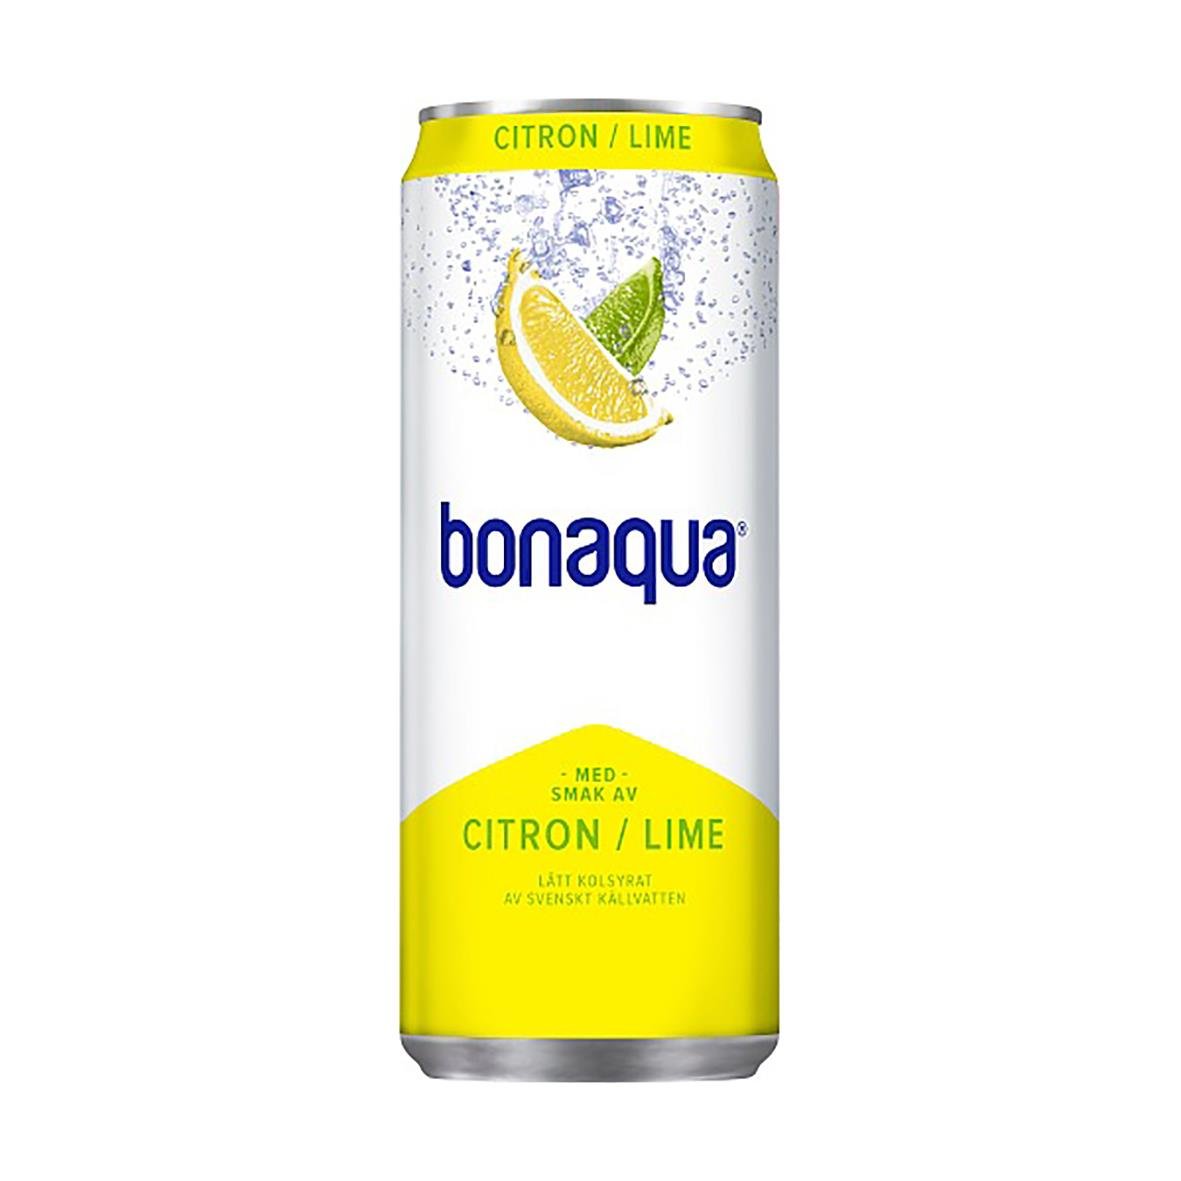 Kolsyrat vatten Bonaqua Citrus burk 33cl inkl pant